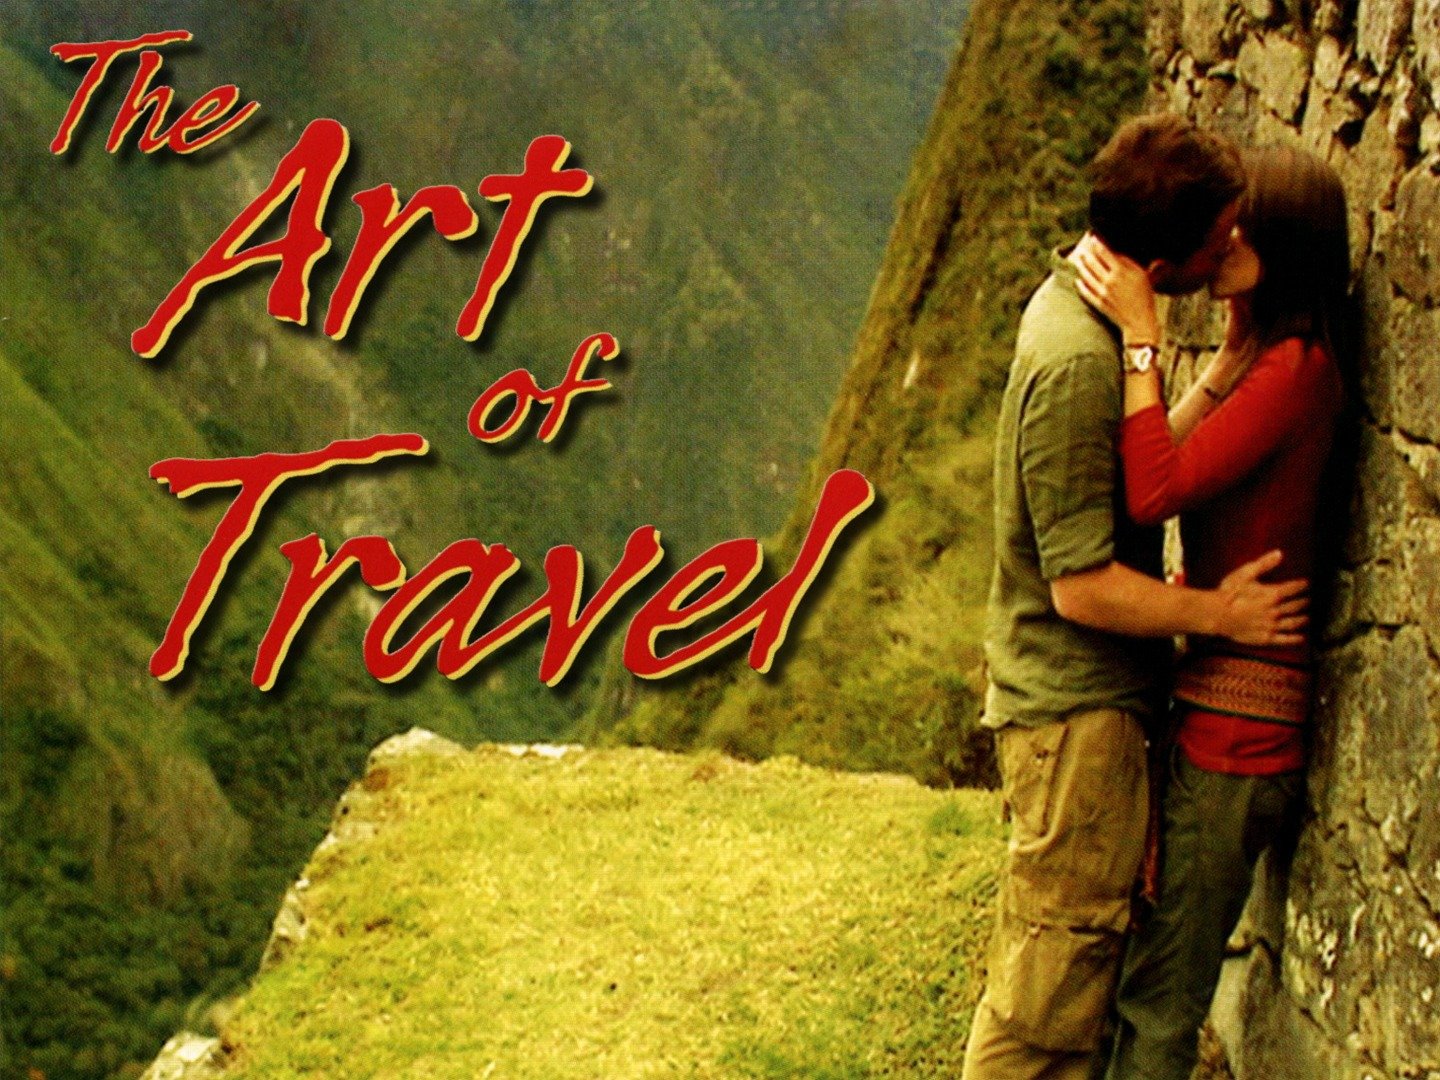 art of travel movie